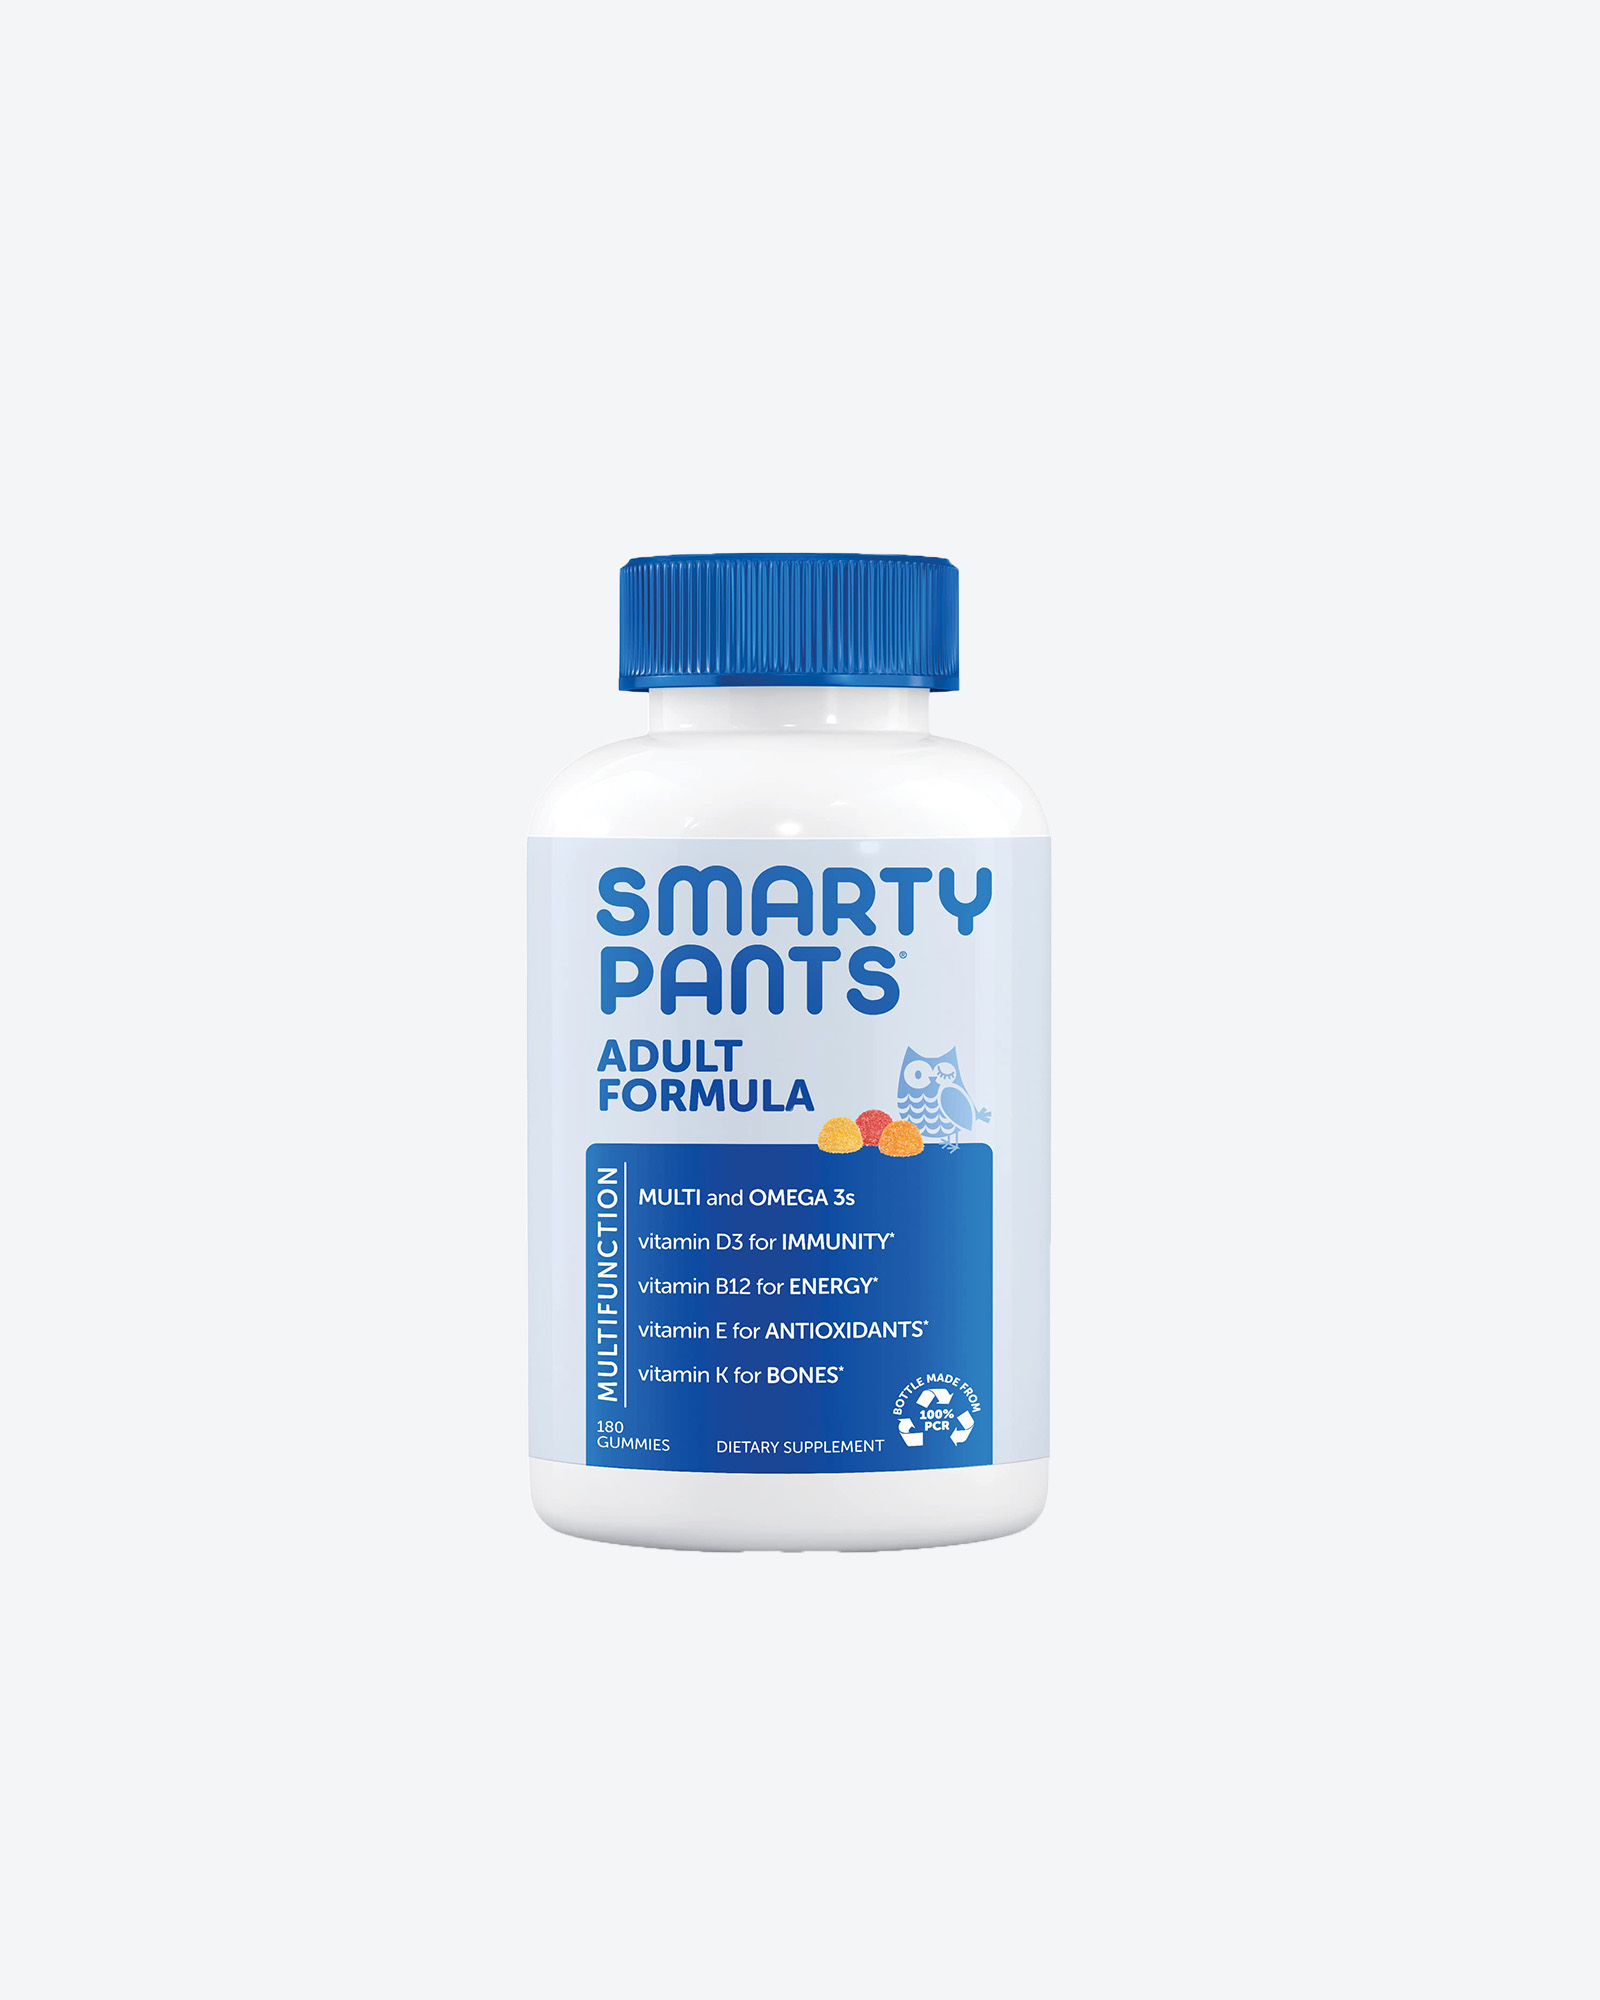 Smartypants Vitamins Project  sheila buchanan designs